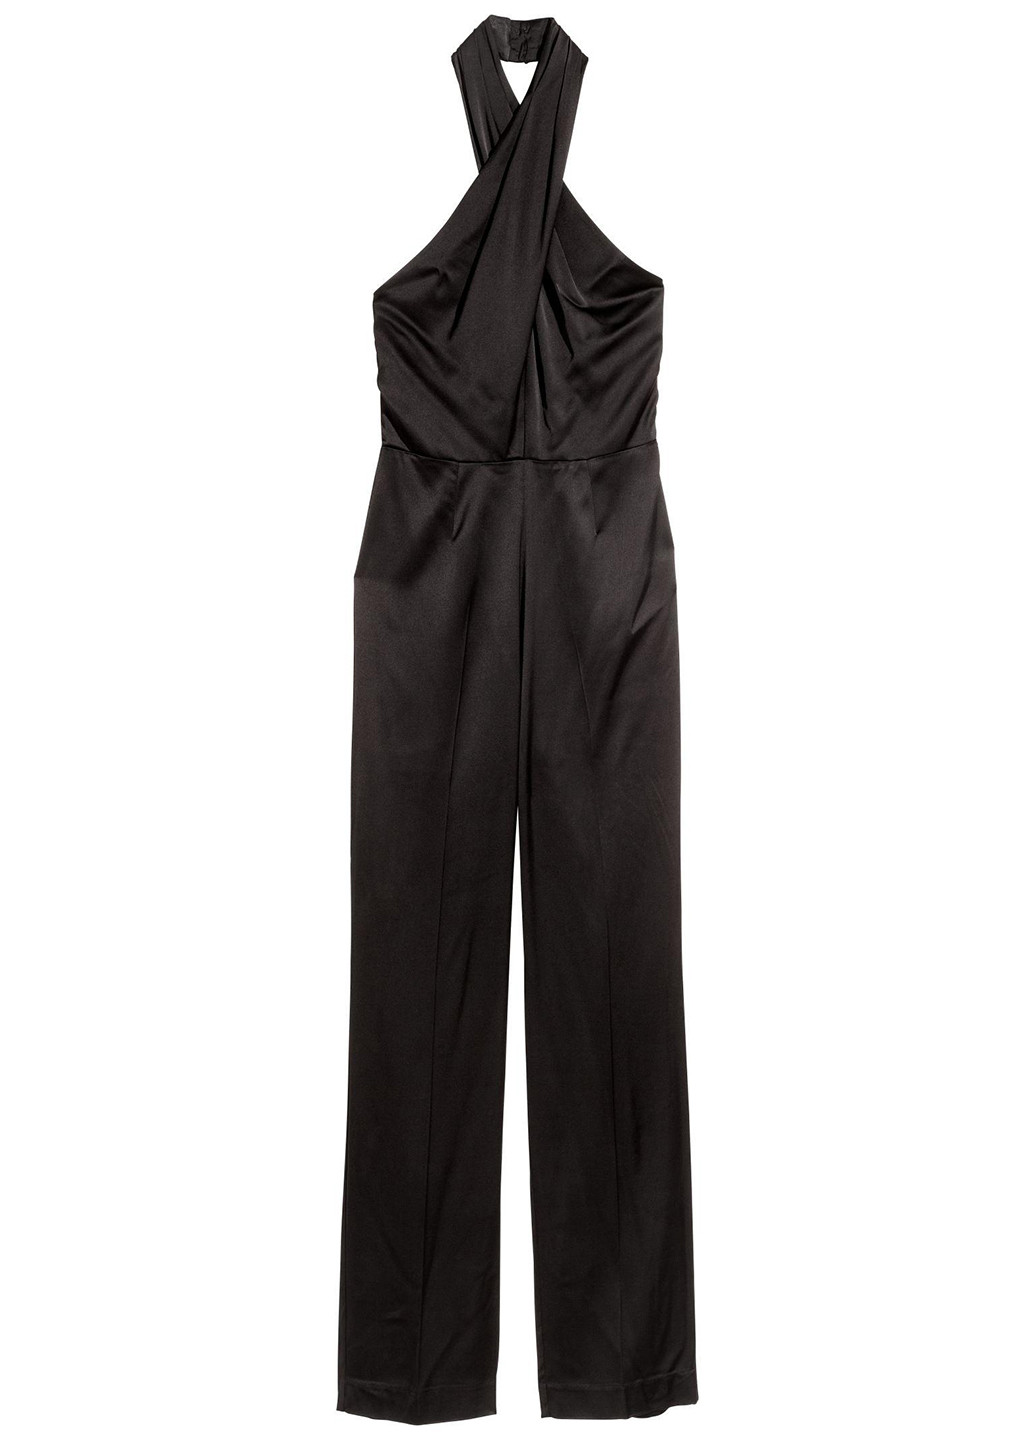 Комбинезон H&M комбинезон-брюки однотонный чёрный кэжуал вискоза, атлас